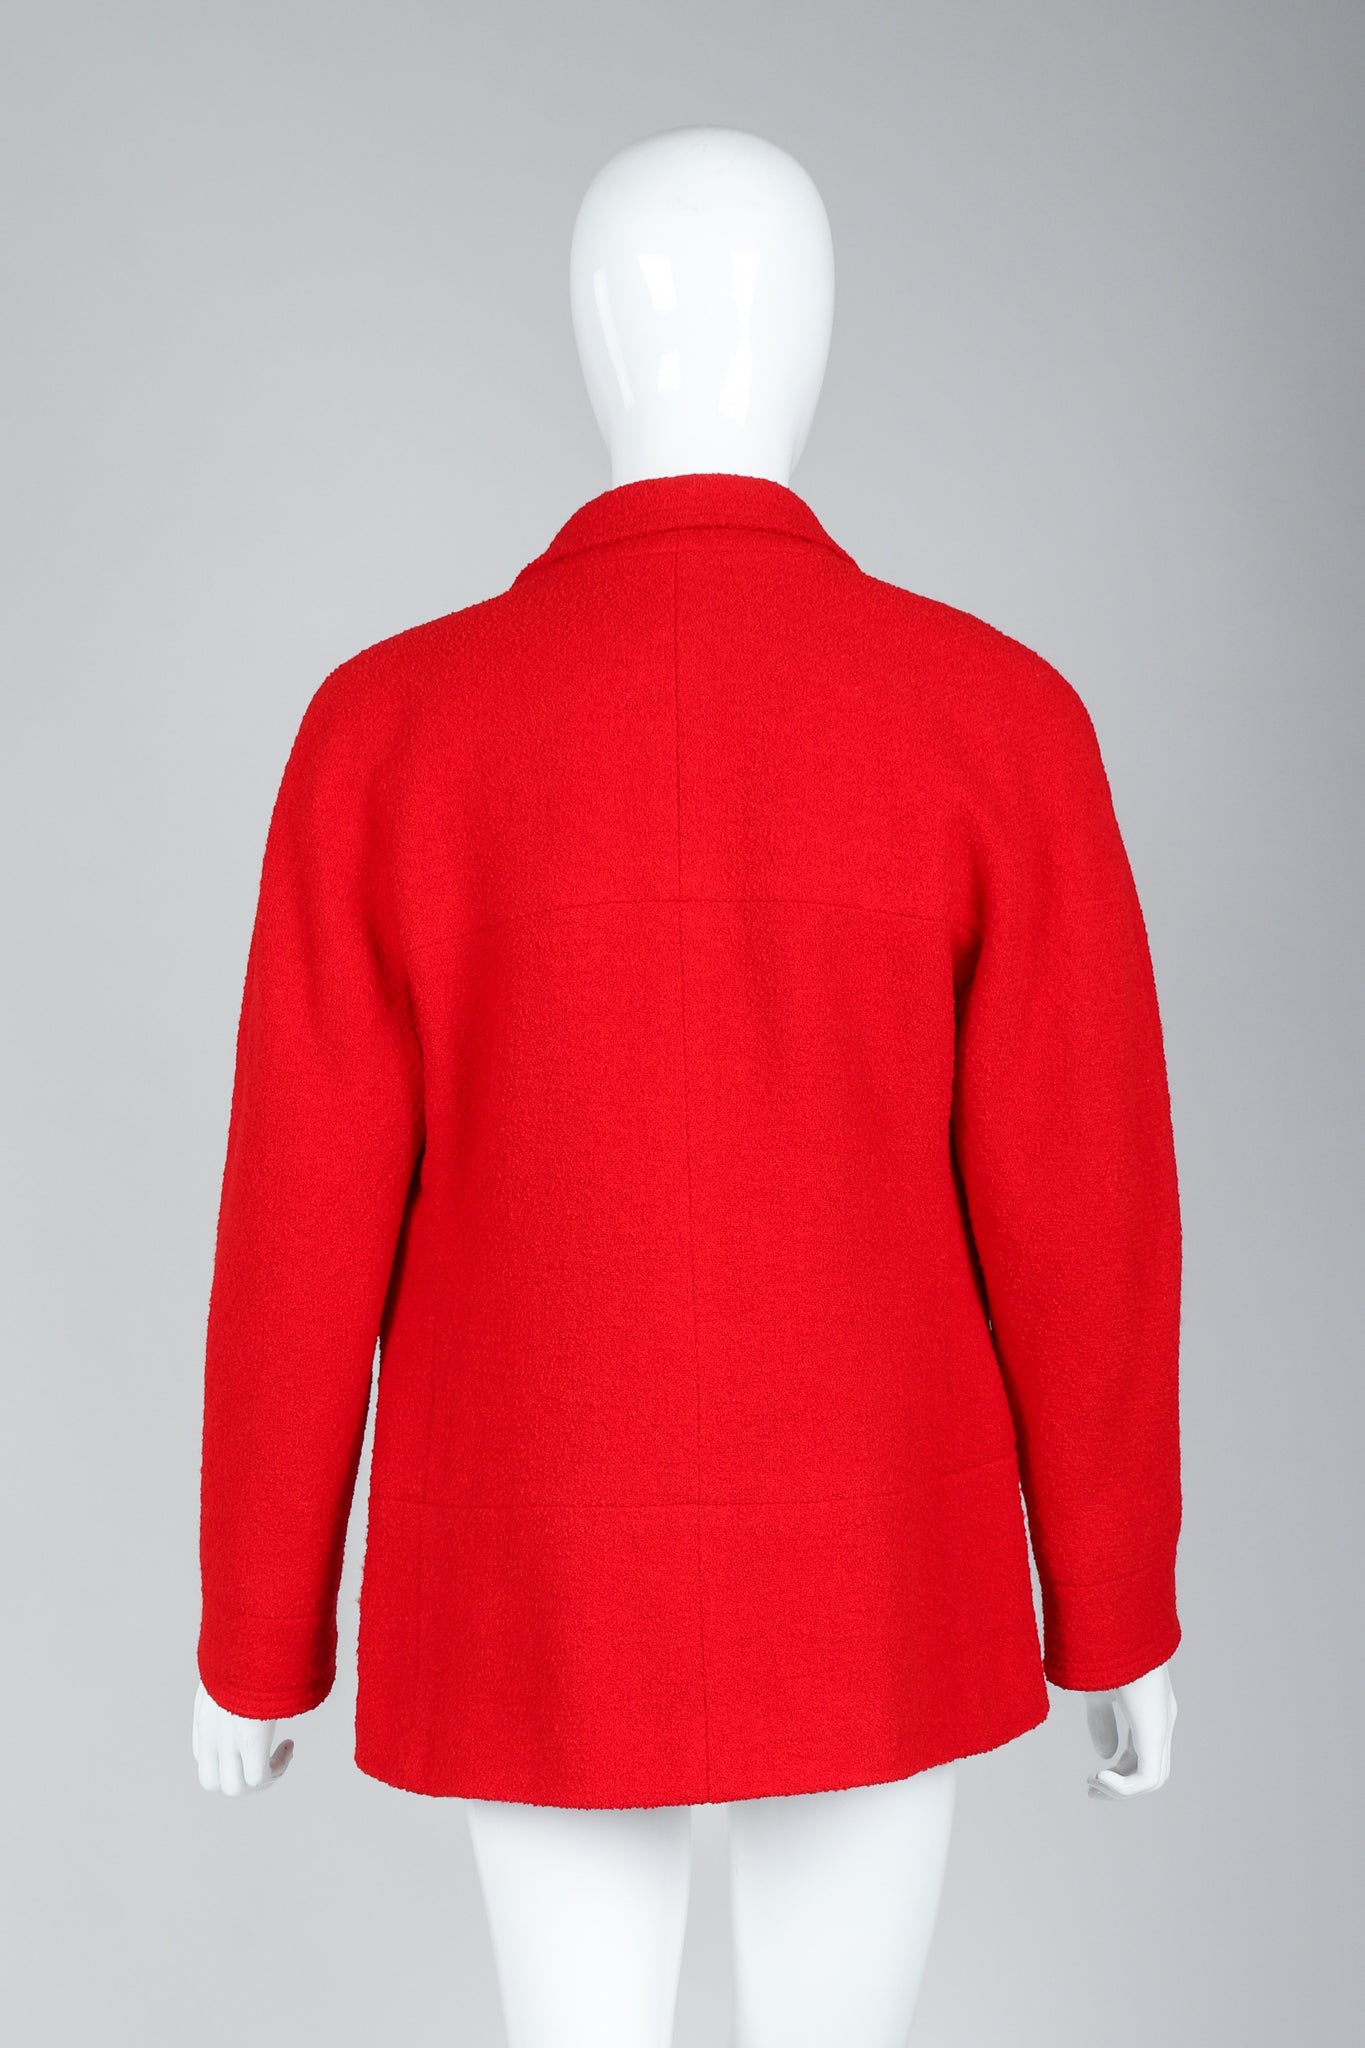 Recess Vintage Chanel Red Curved Lapel Bouclé Jacket on Mannequin, Back